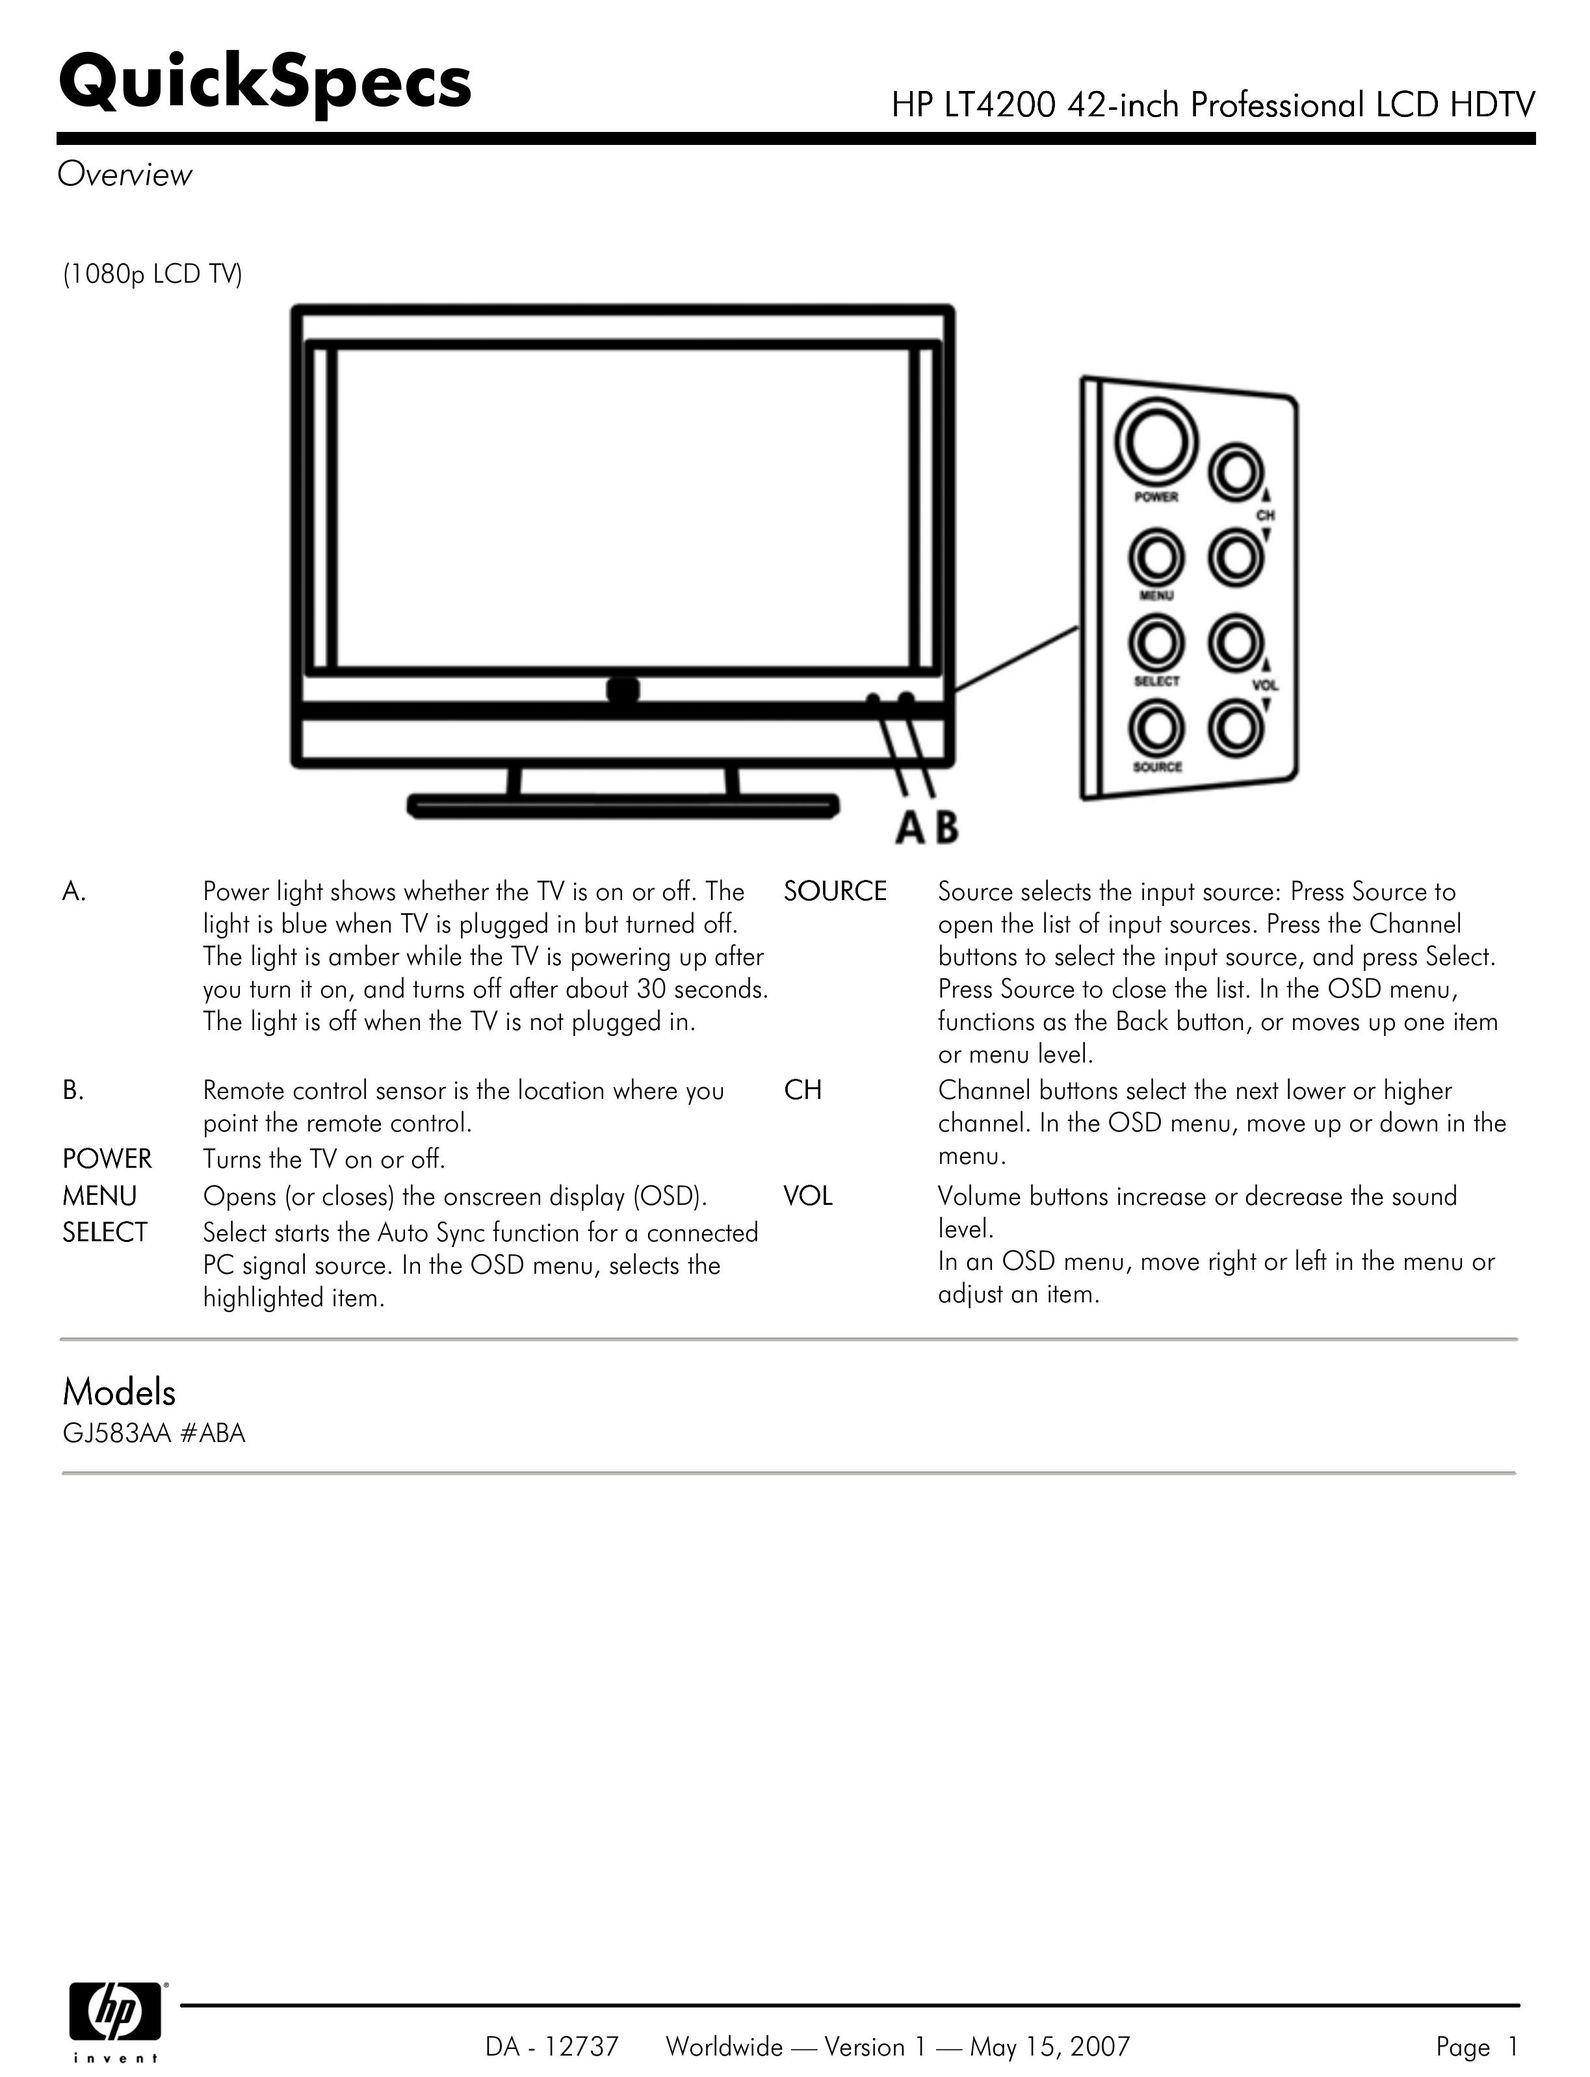 HP (Hewlett-Packard) LT4200 Flat Panel Television User Manual